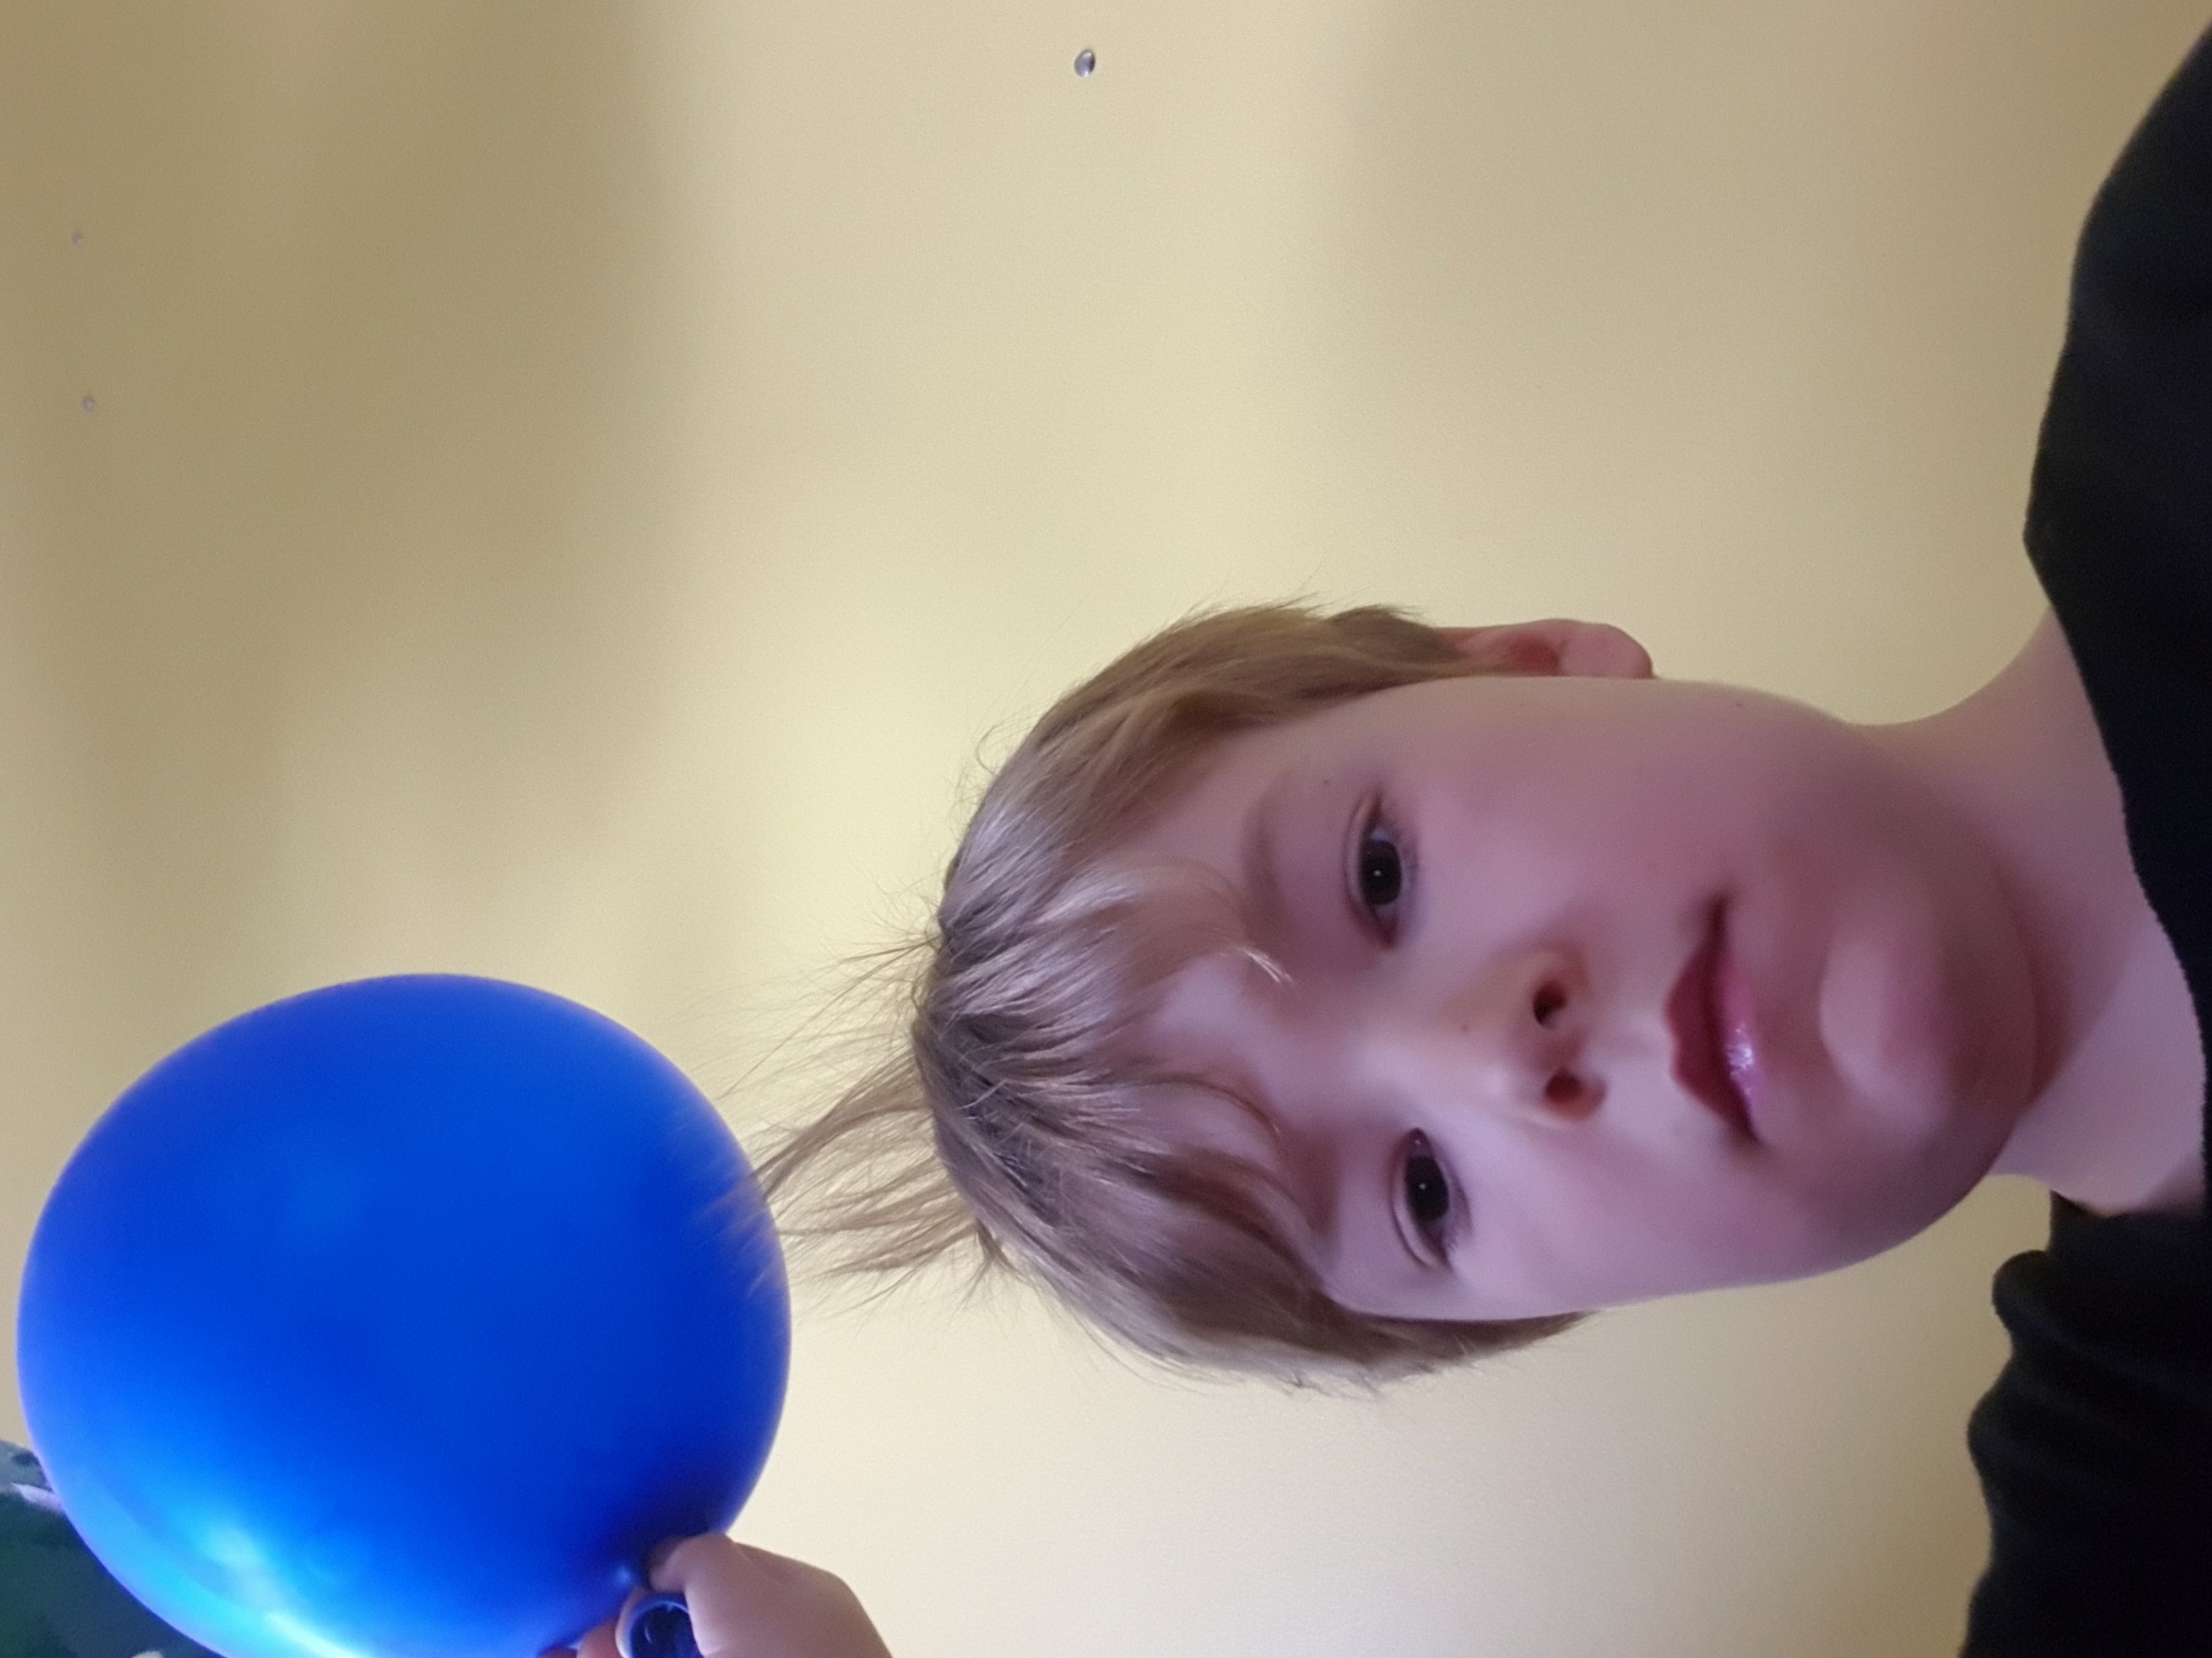 Ballon making hair stand up Blank Meme Template